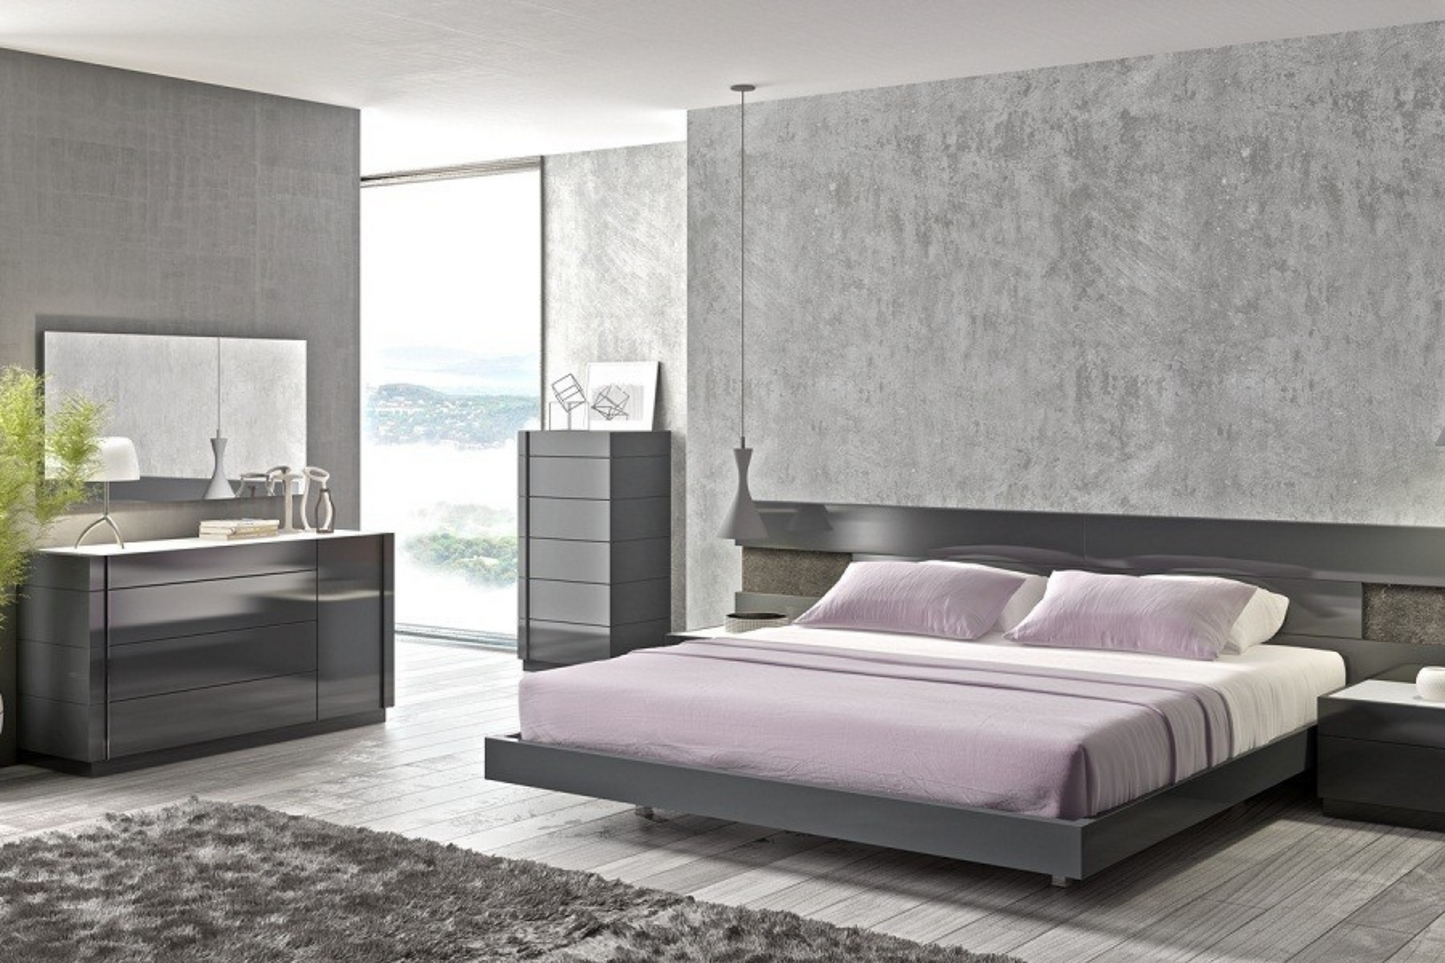 Braga Premium Bedroom Nightstand SKU:178671